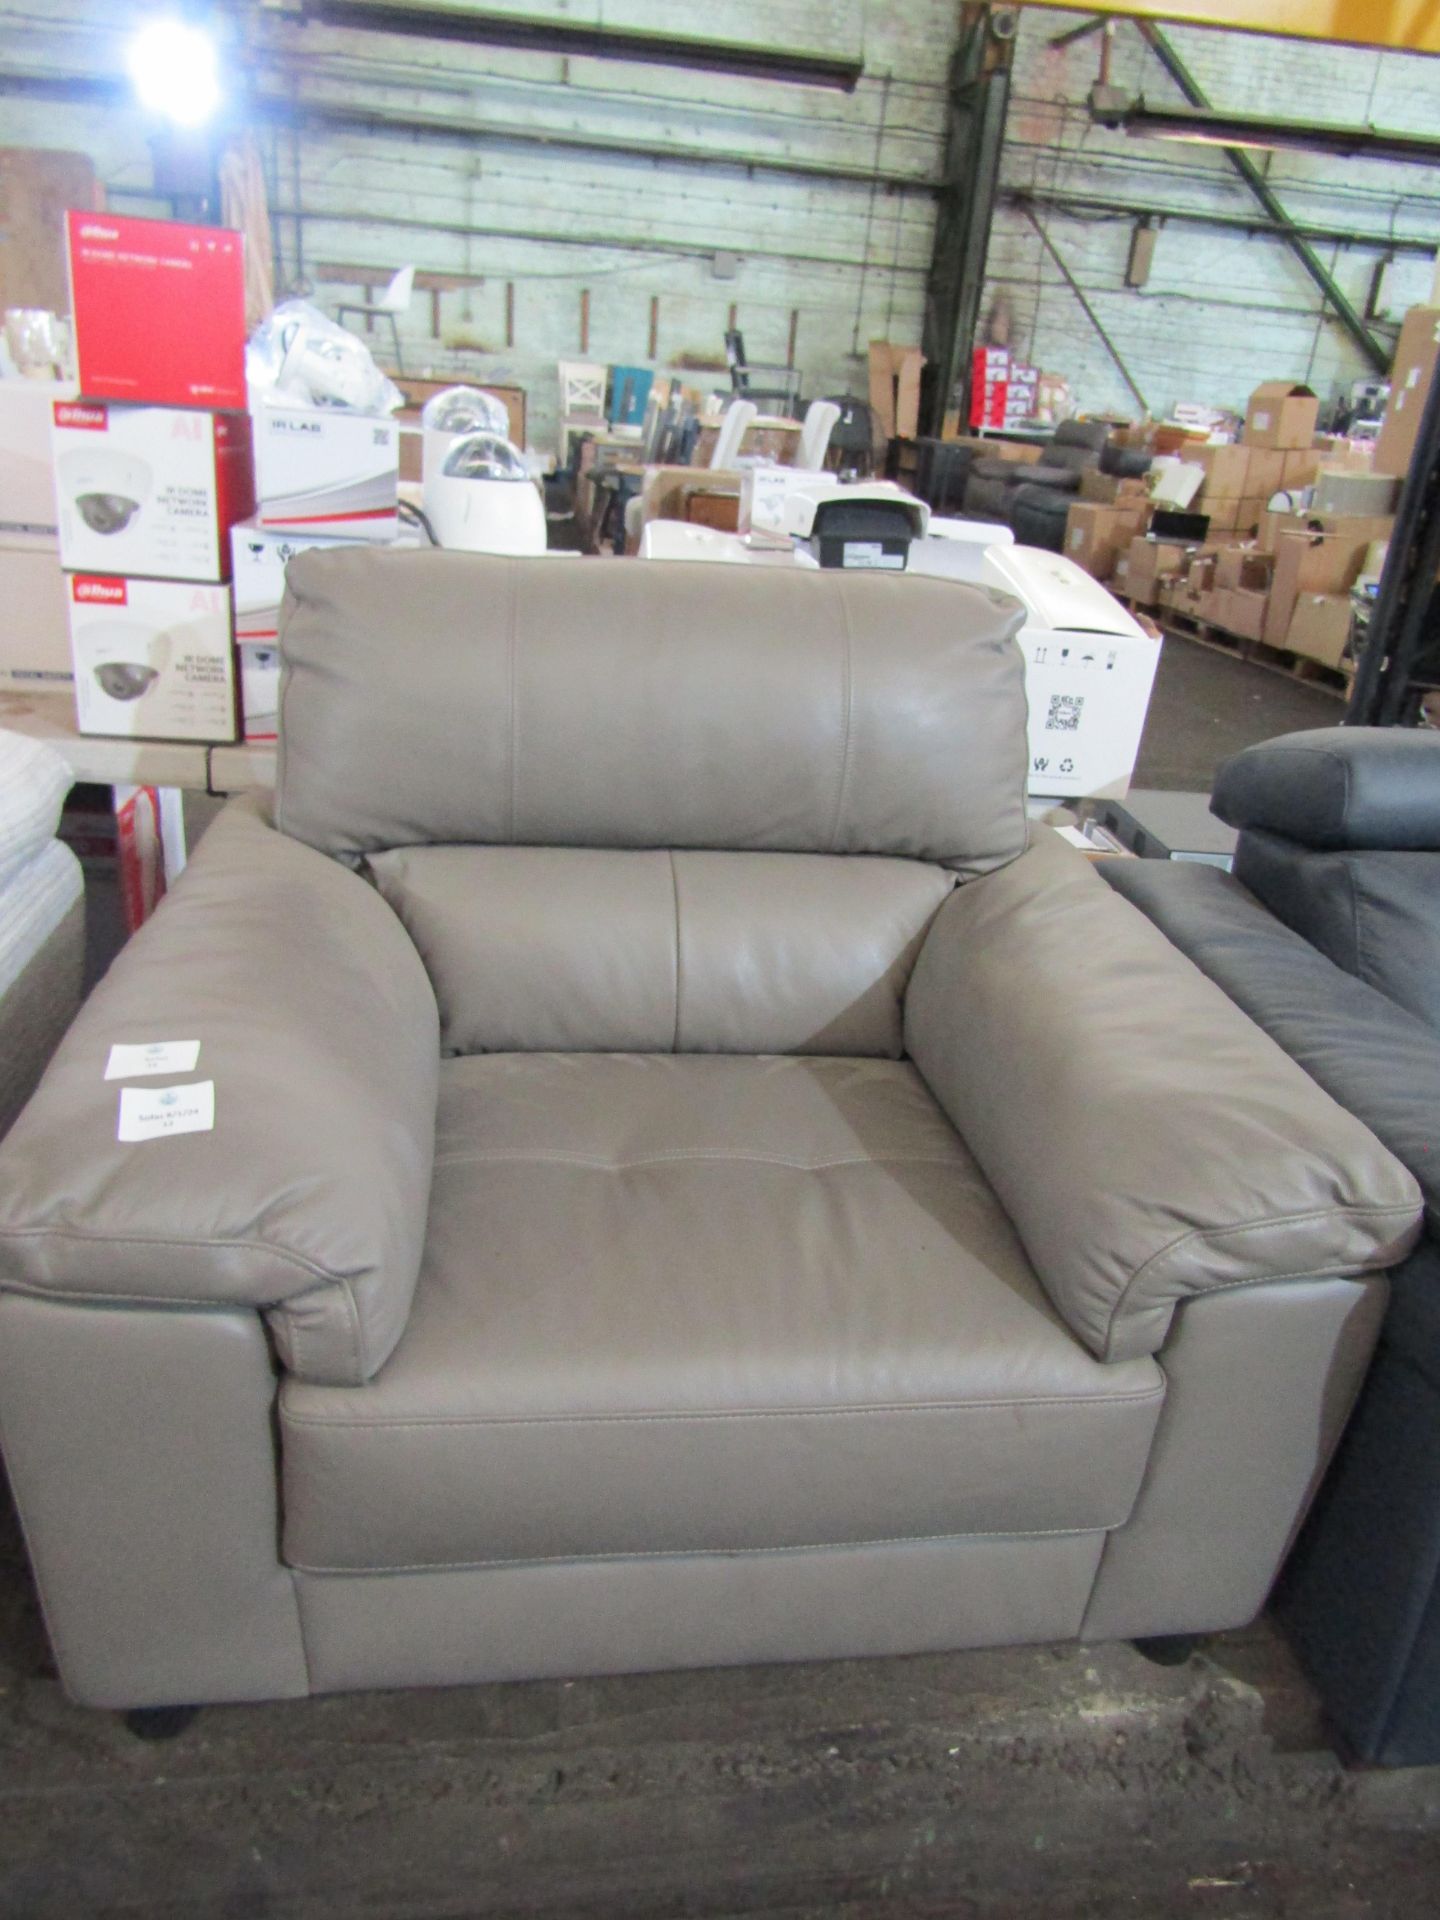 Oak Furnitureland Palermo Armchair in Light Grey Leather RRP 799.99